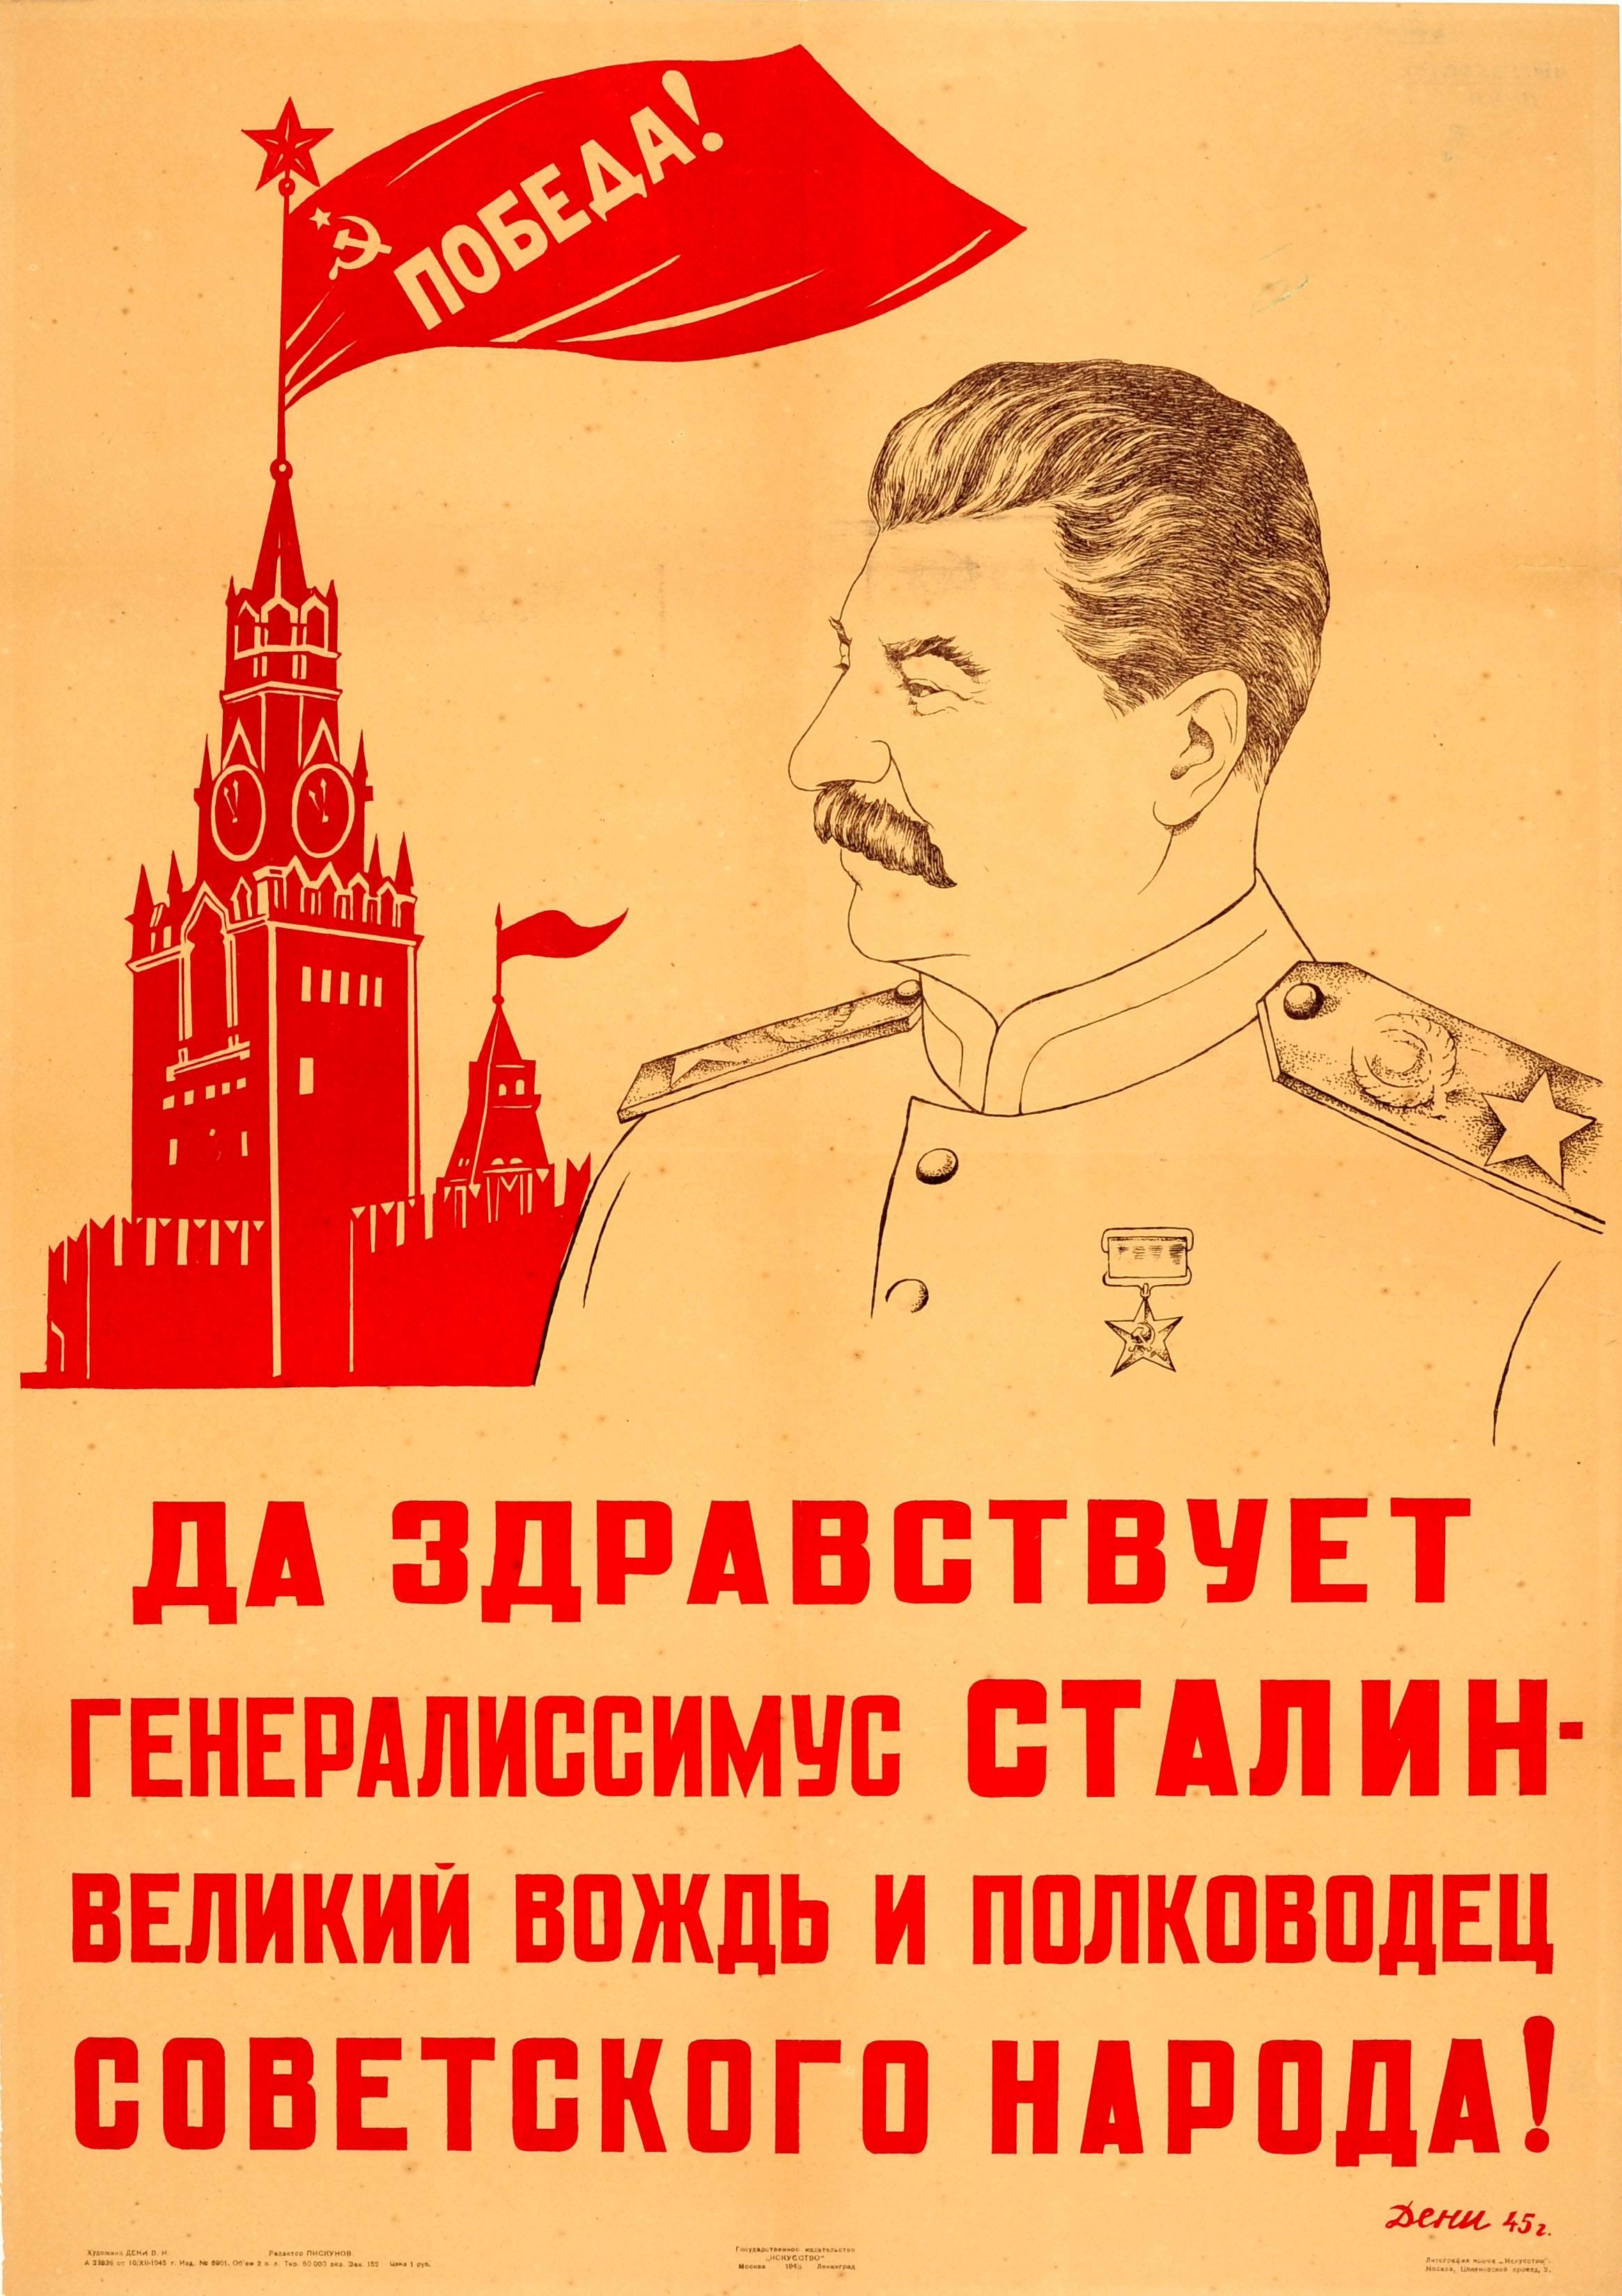 Viktor Deni Print - Original Vintage Soviet Poster USSR WWII Victory Long Live Generalissimos Stalin